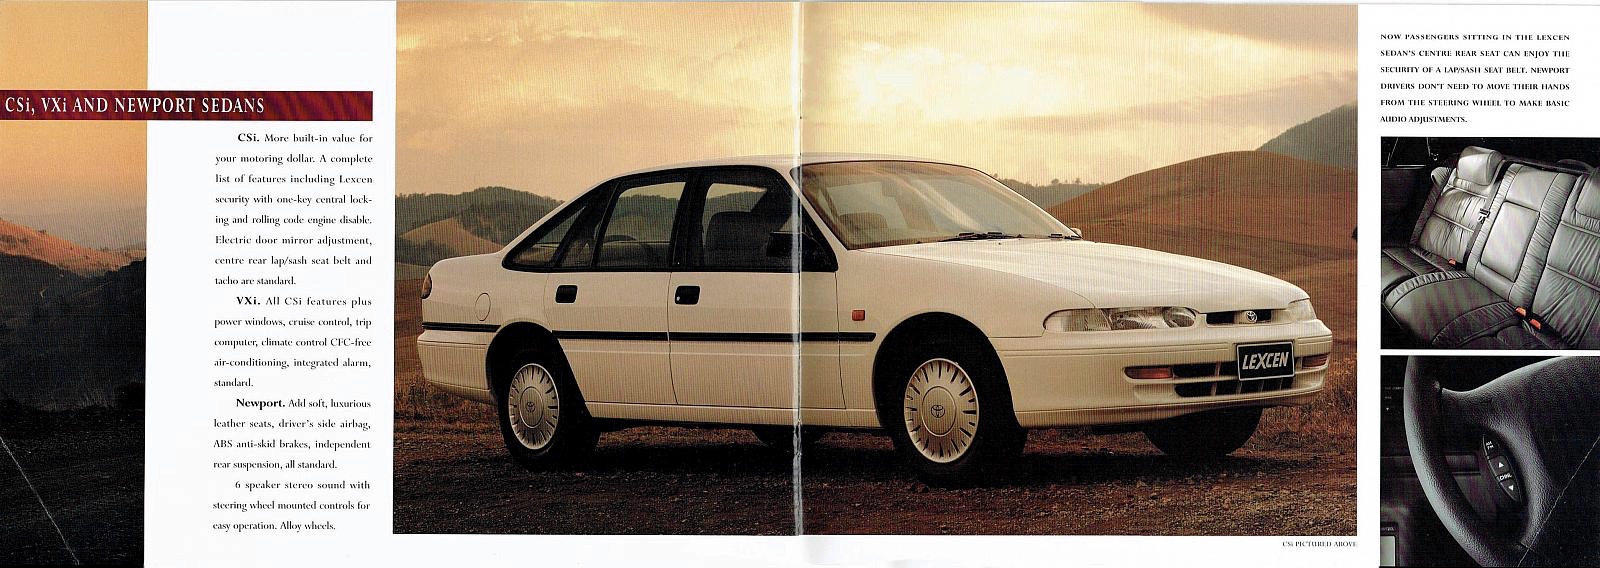 1994 Toyota Lexcen Brochure Page 2